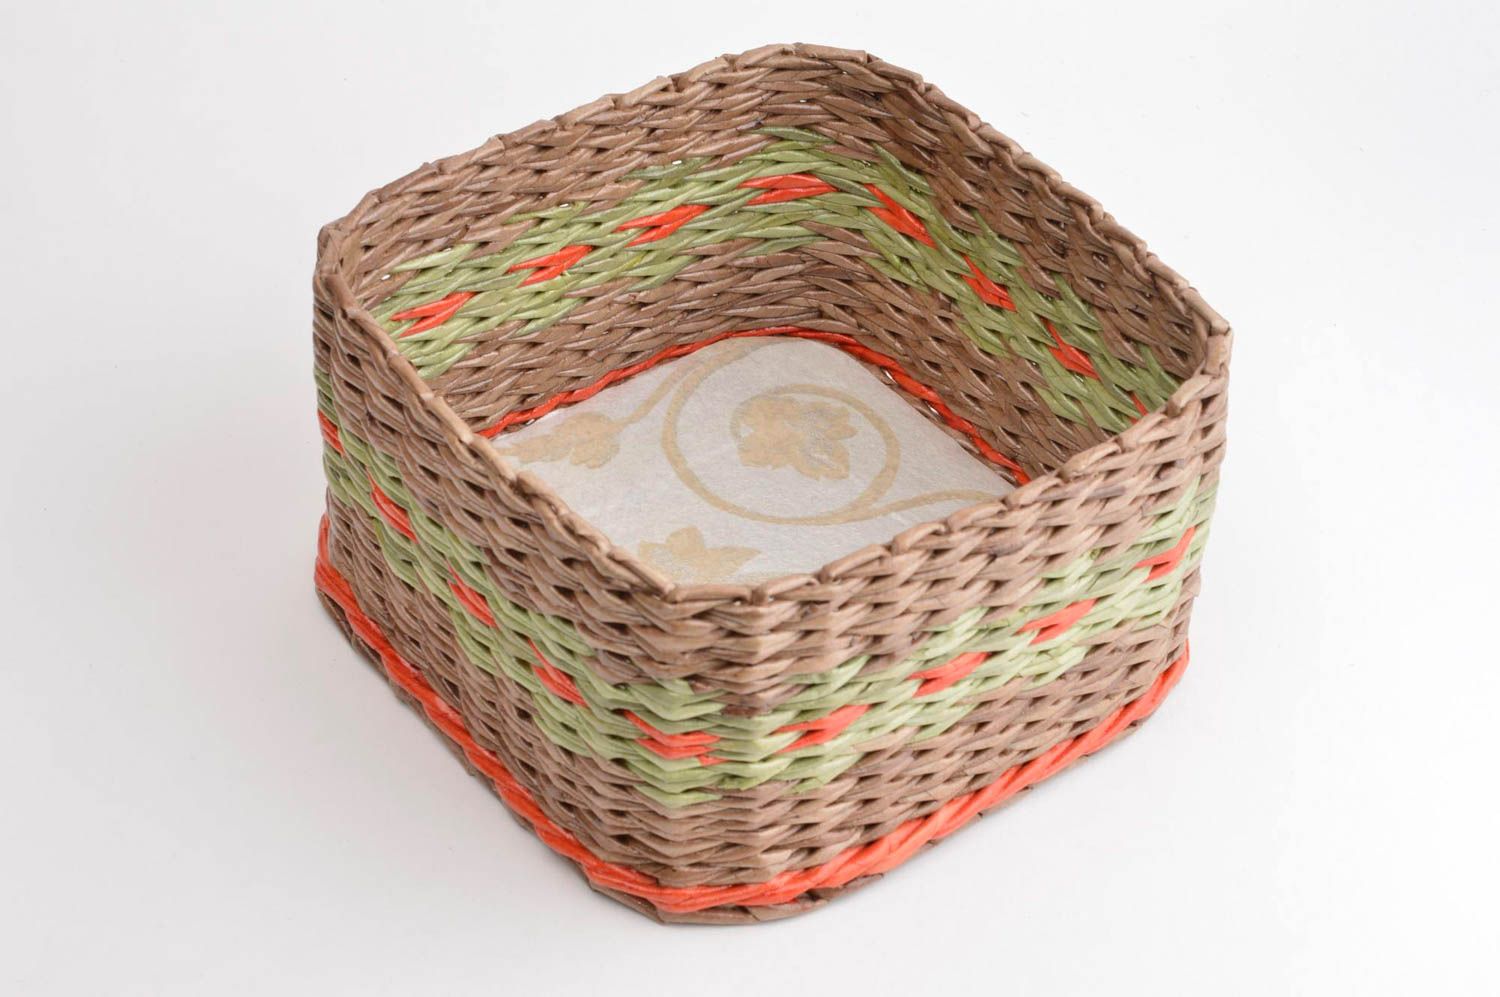 Handmade wicker box unusual wicker basket interior decor ideas unusual gift photo 3